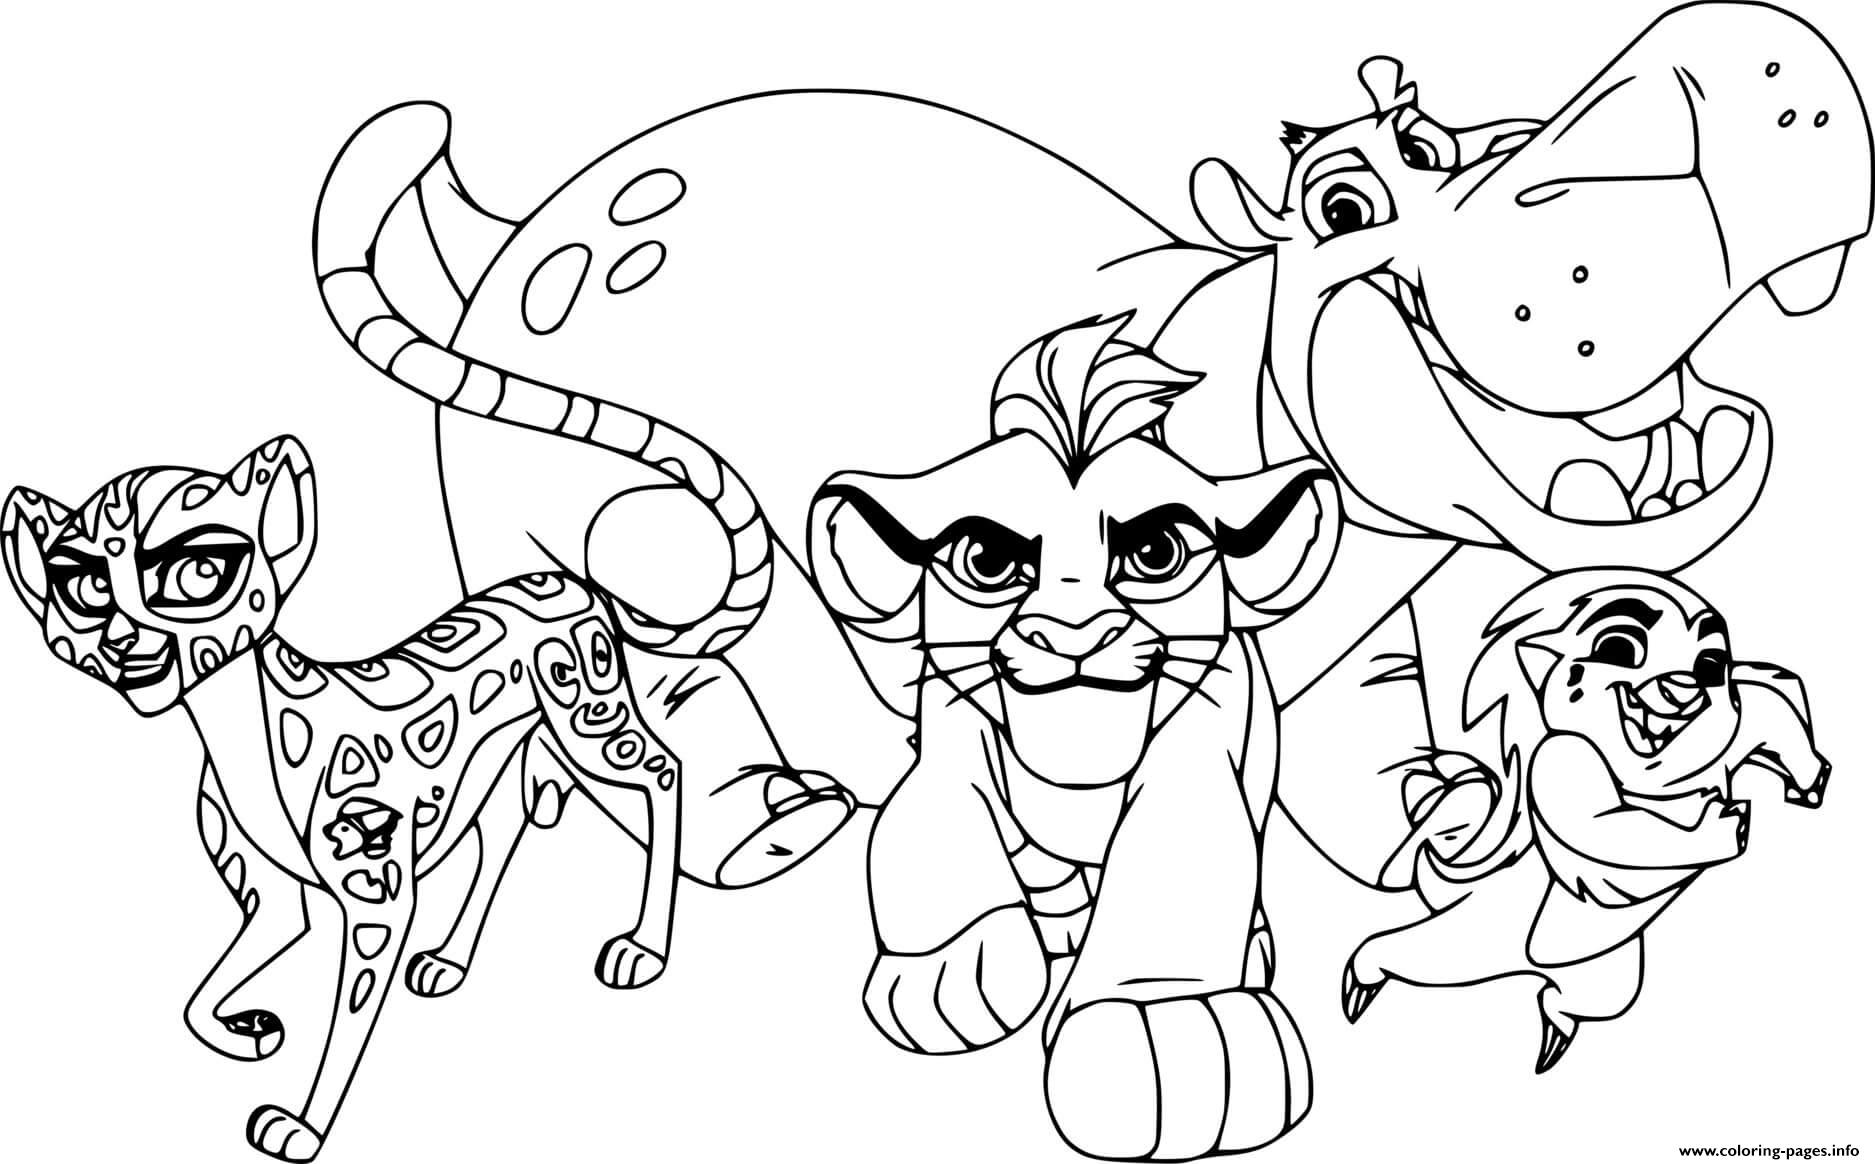 Four Lion Guard Members coloring